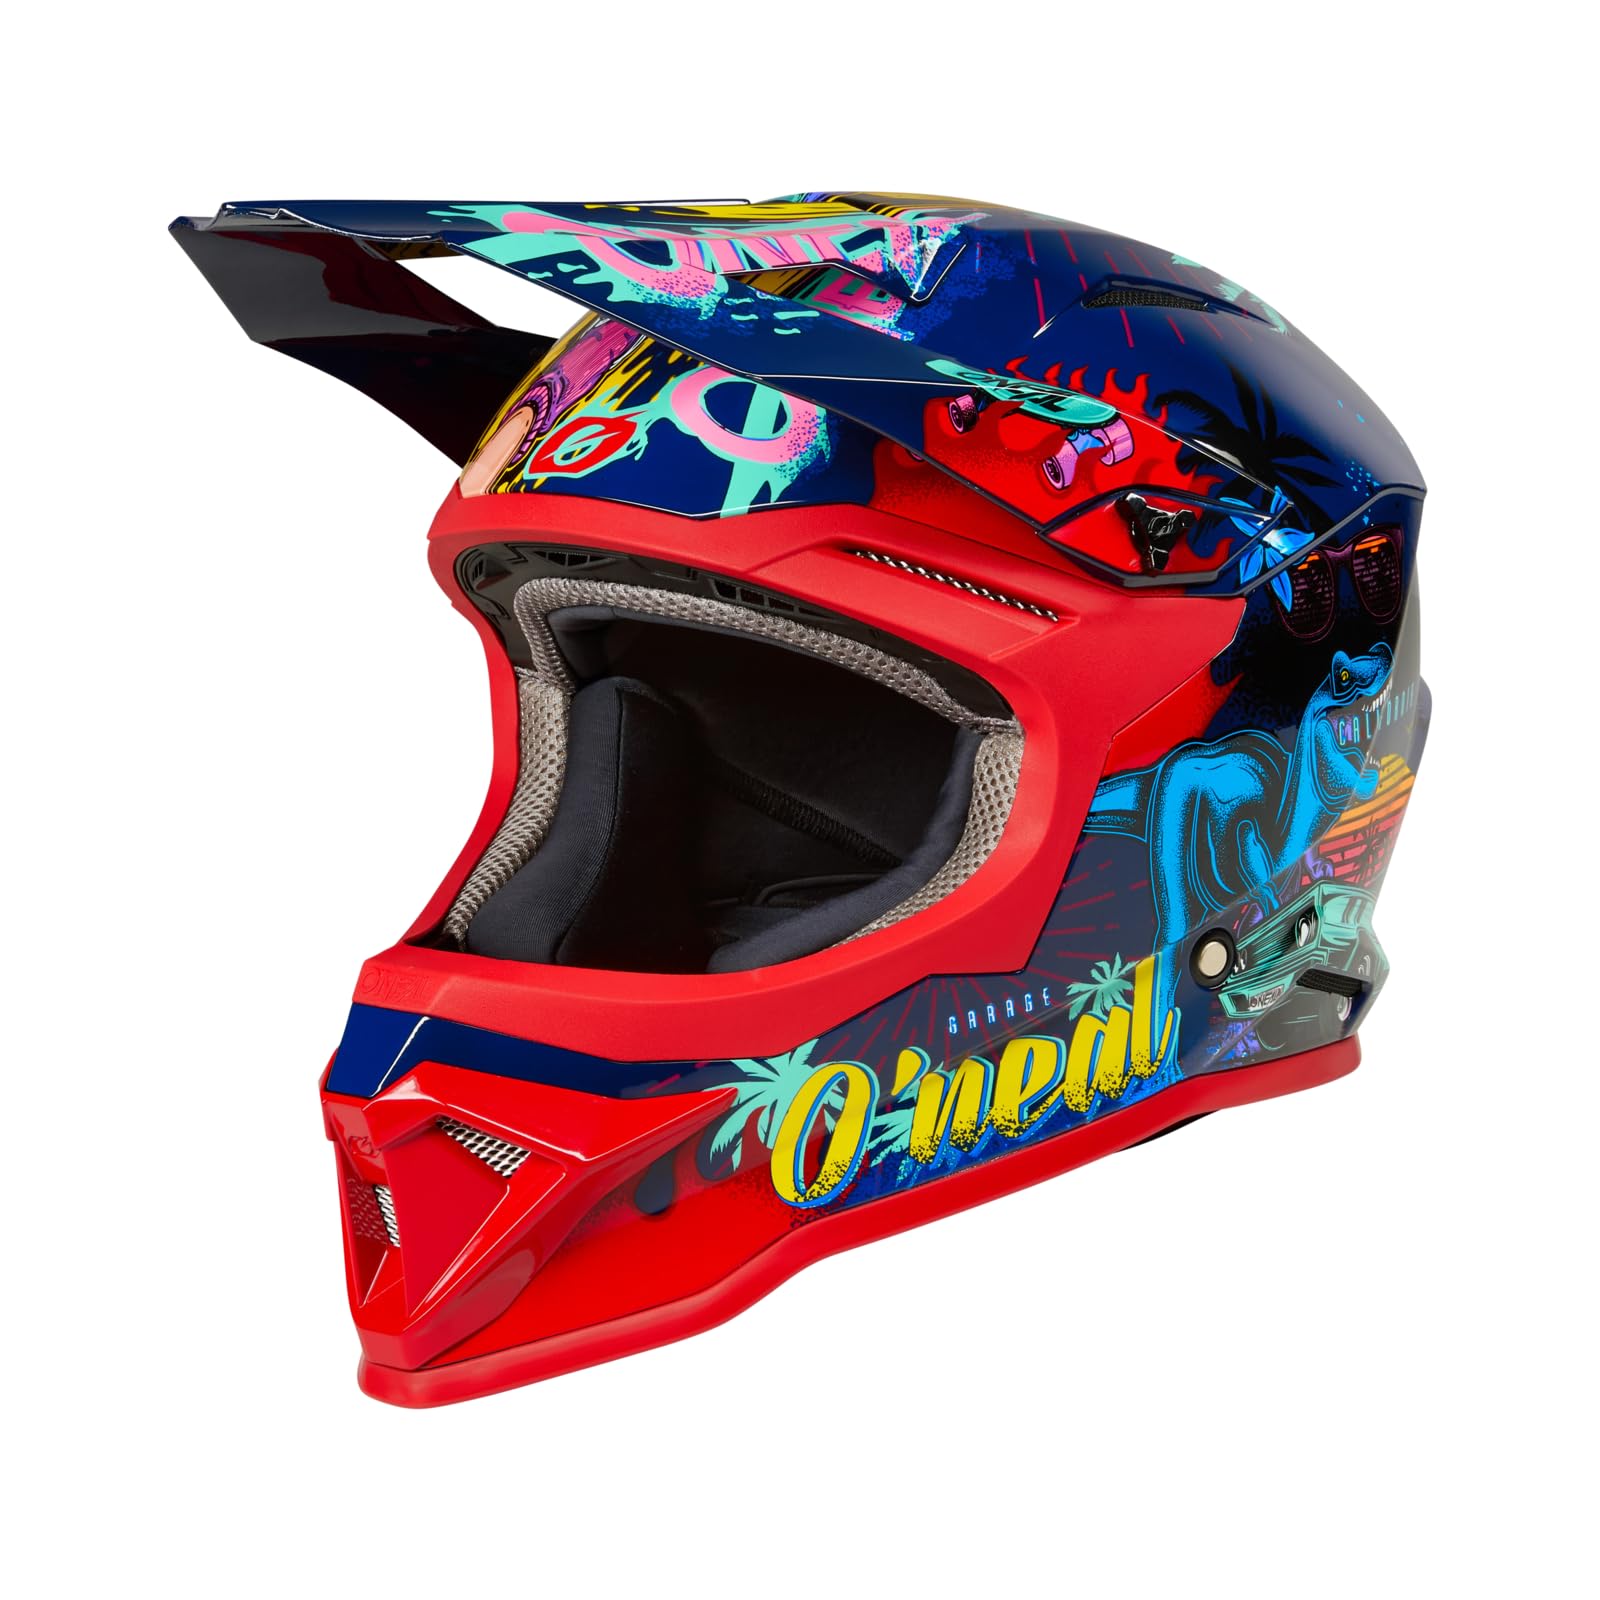 O'NEAL | Motocross-Helm | Kinder | MX Enduro | ABS-Schale, Komfort-Innenfutter, Lüftungsöffnungen für optimale Belüftung & Kühlung | 1SRS Youth Helmet REX V.24 | Multi | Größe L von O'NEAL